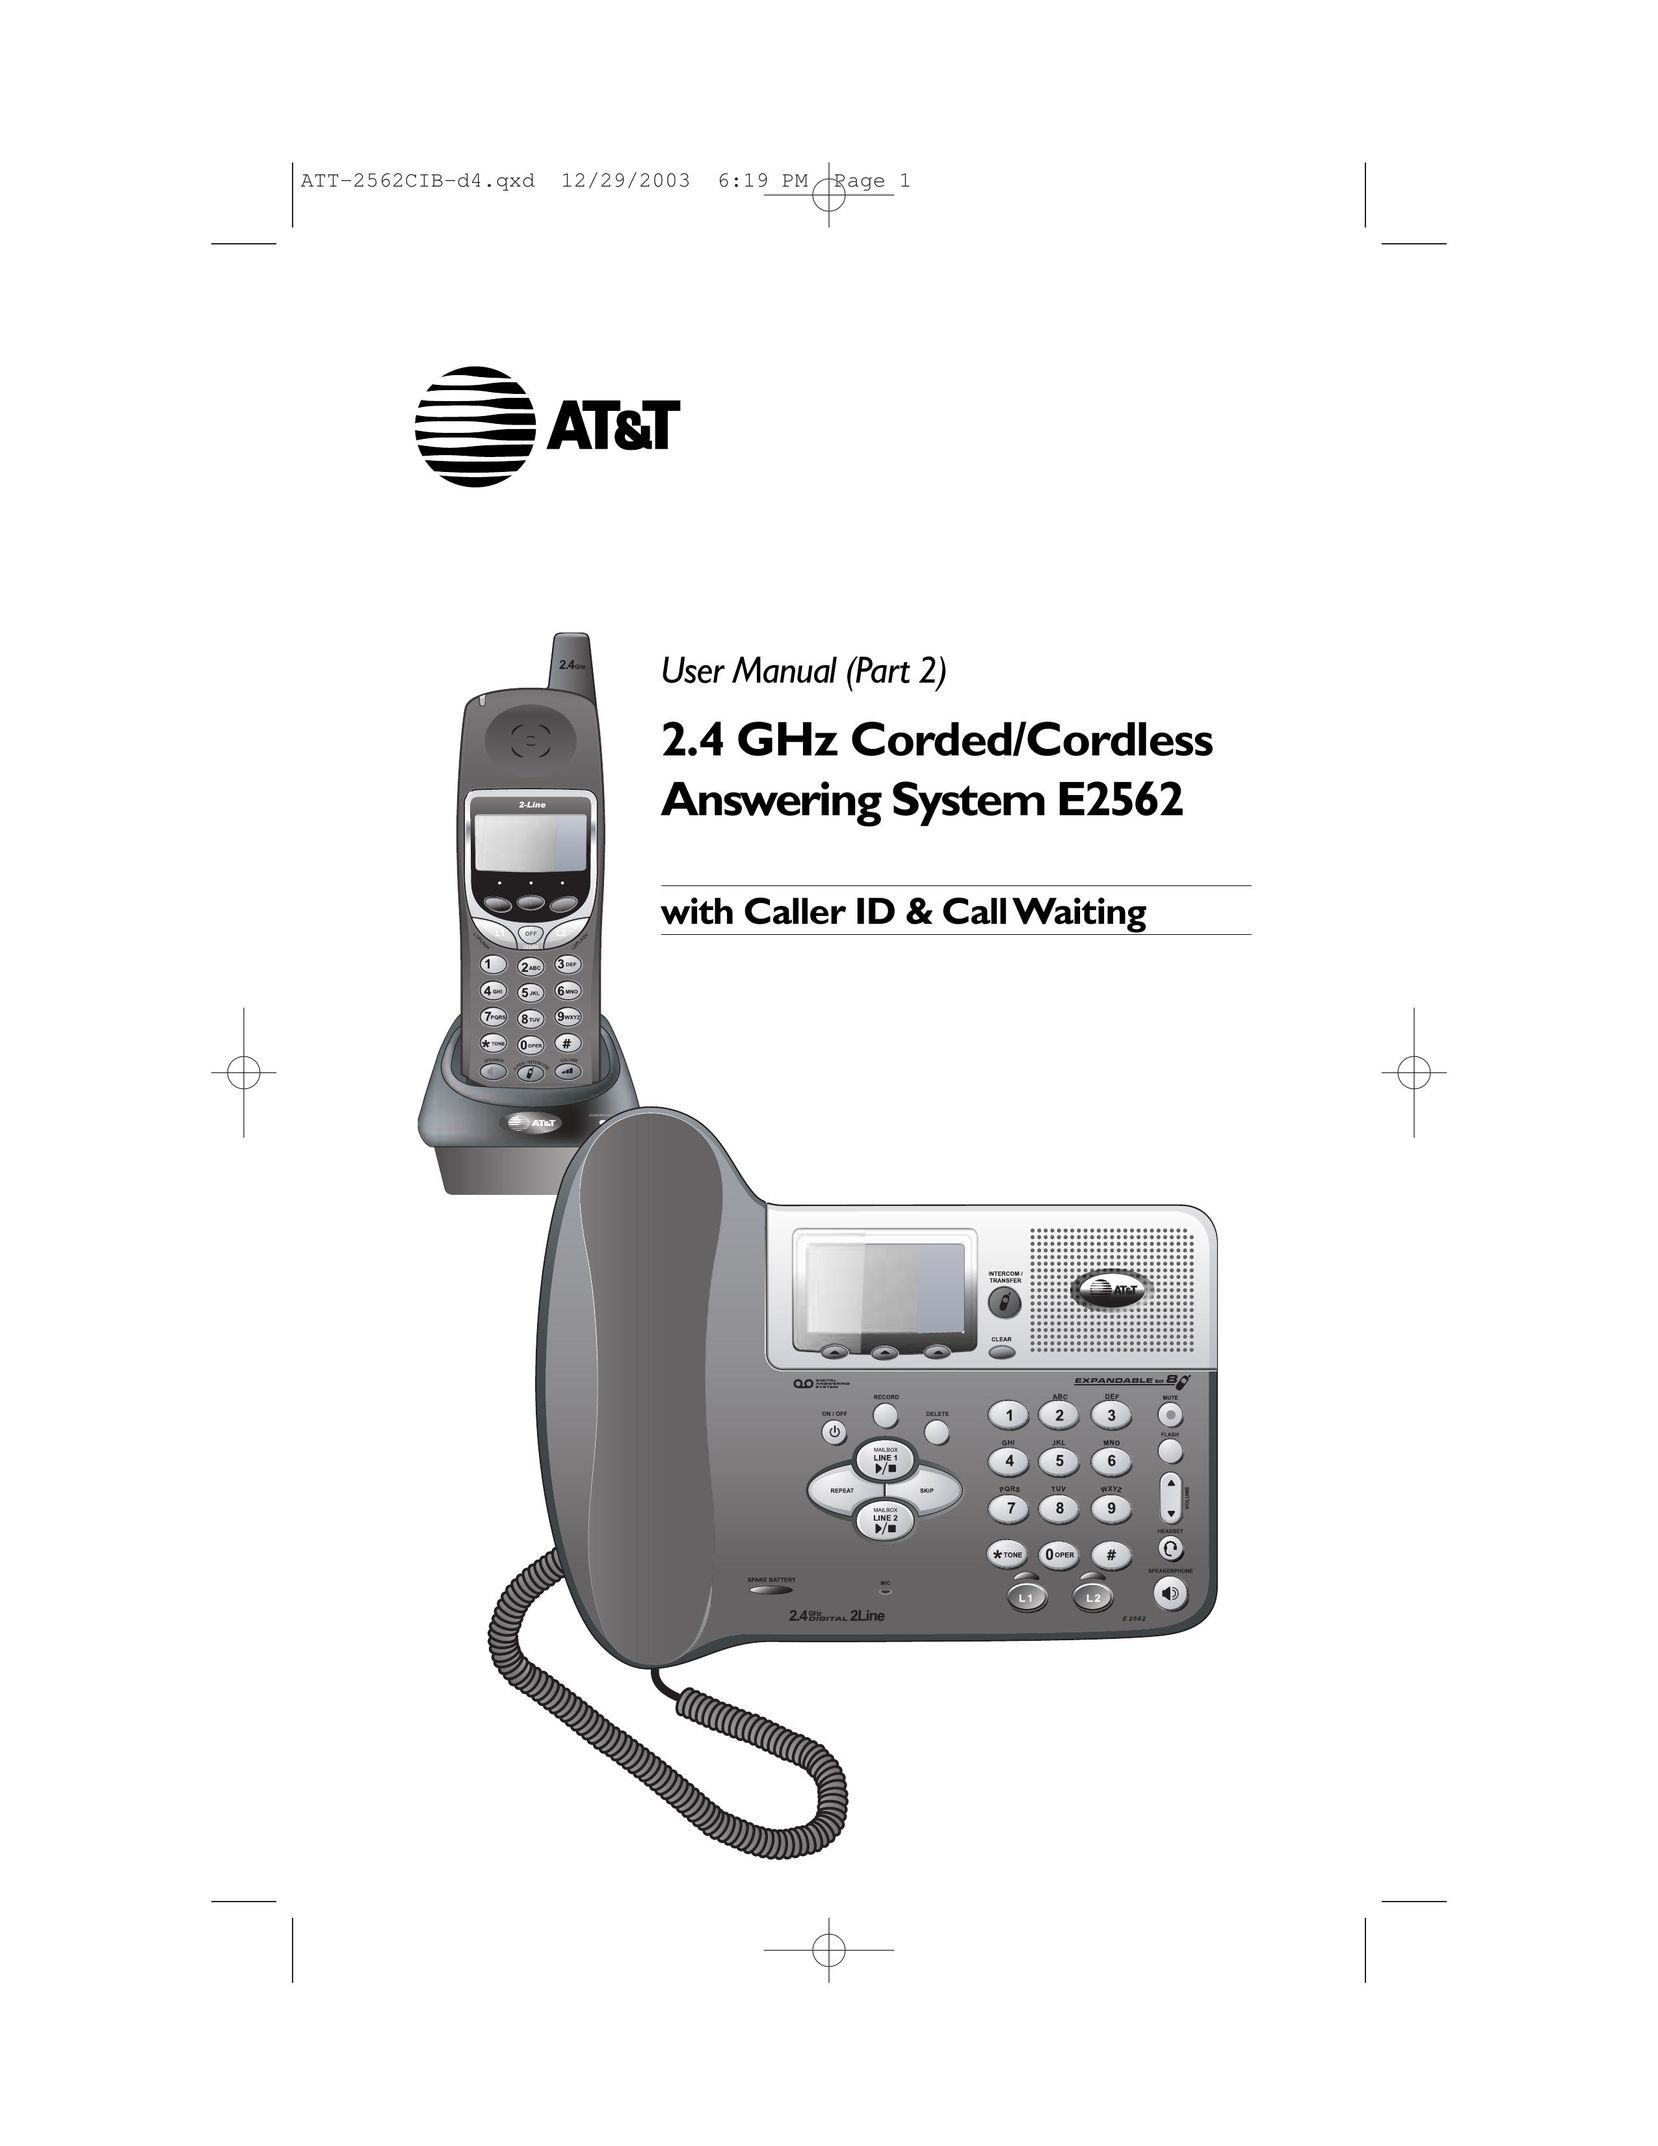 AT&T E2562 Answering Machine User Manual